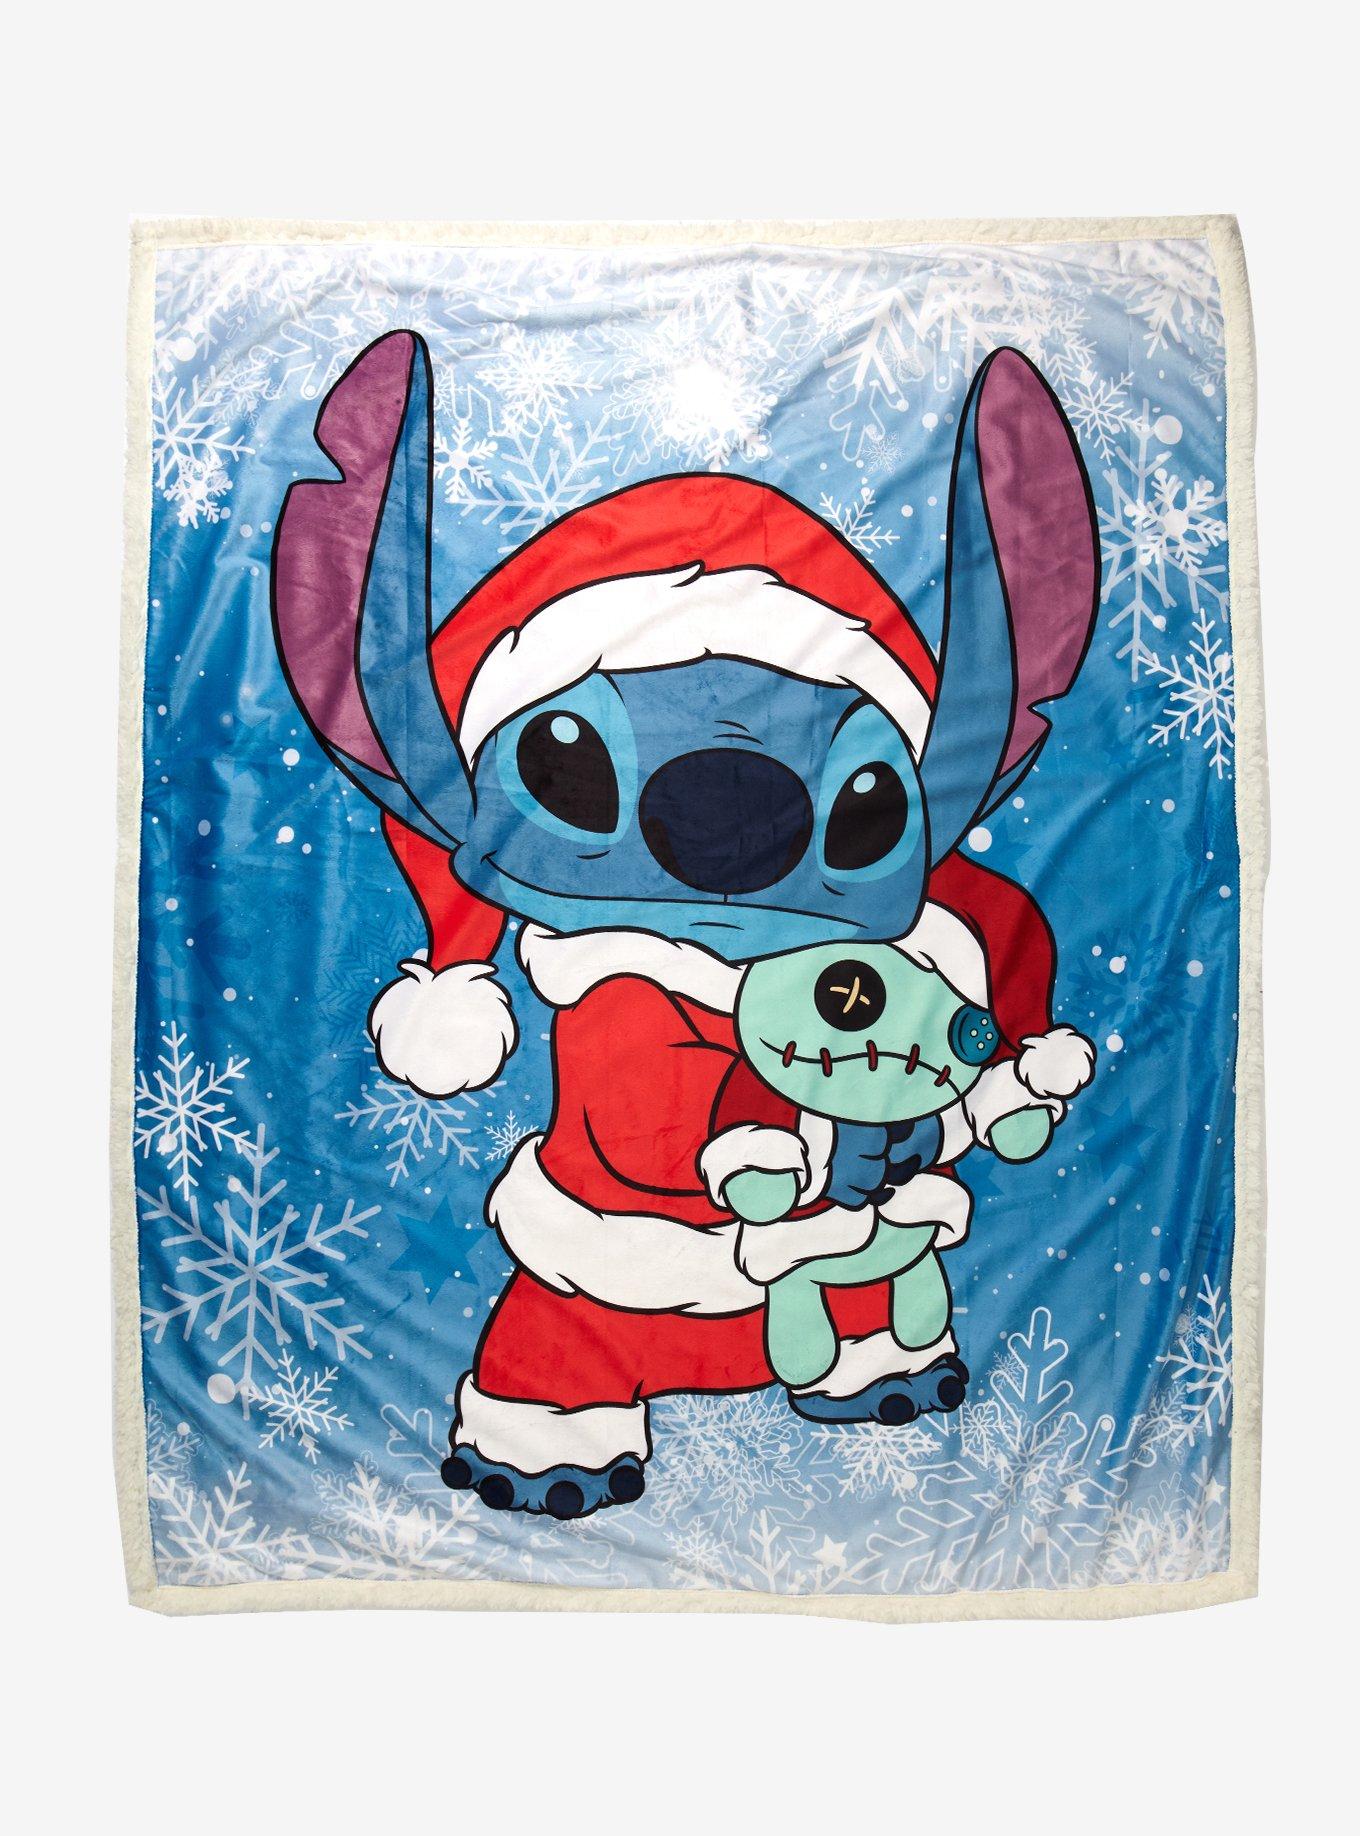 Lilo & Stitch © Disney blanket-style pyjamas - Cartoons - Collabs -  CLOTHING - Woman 